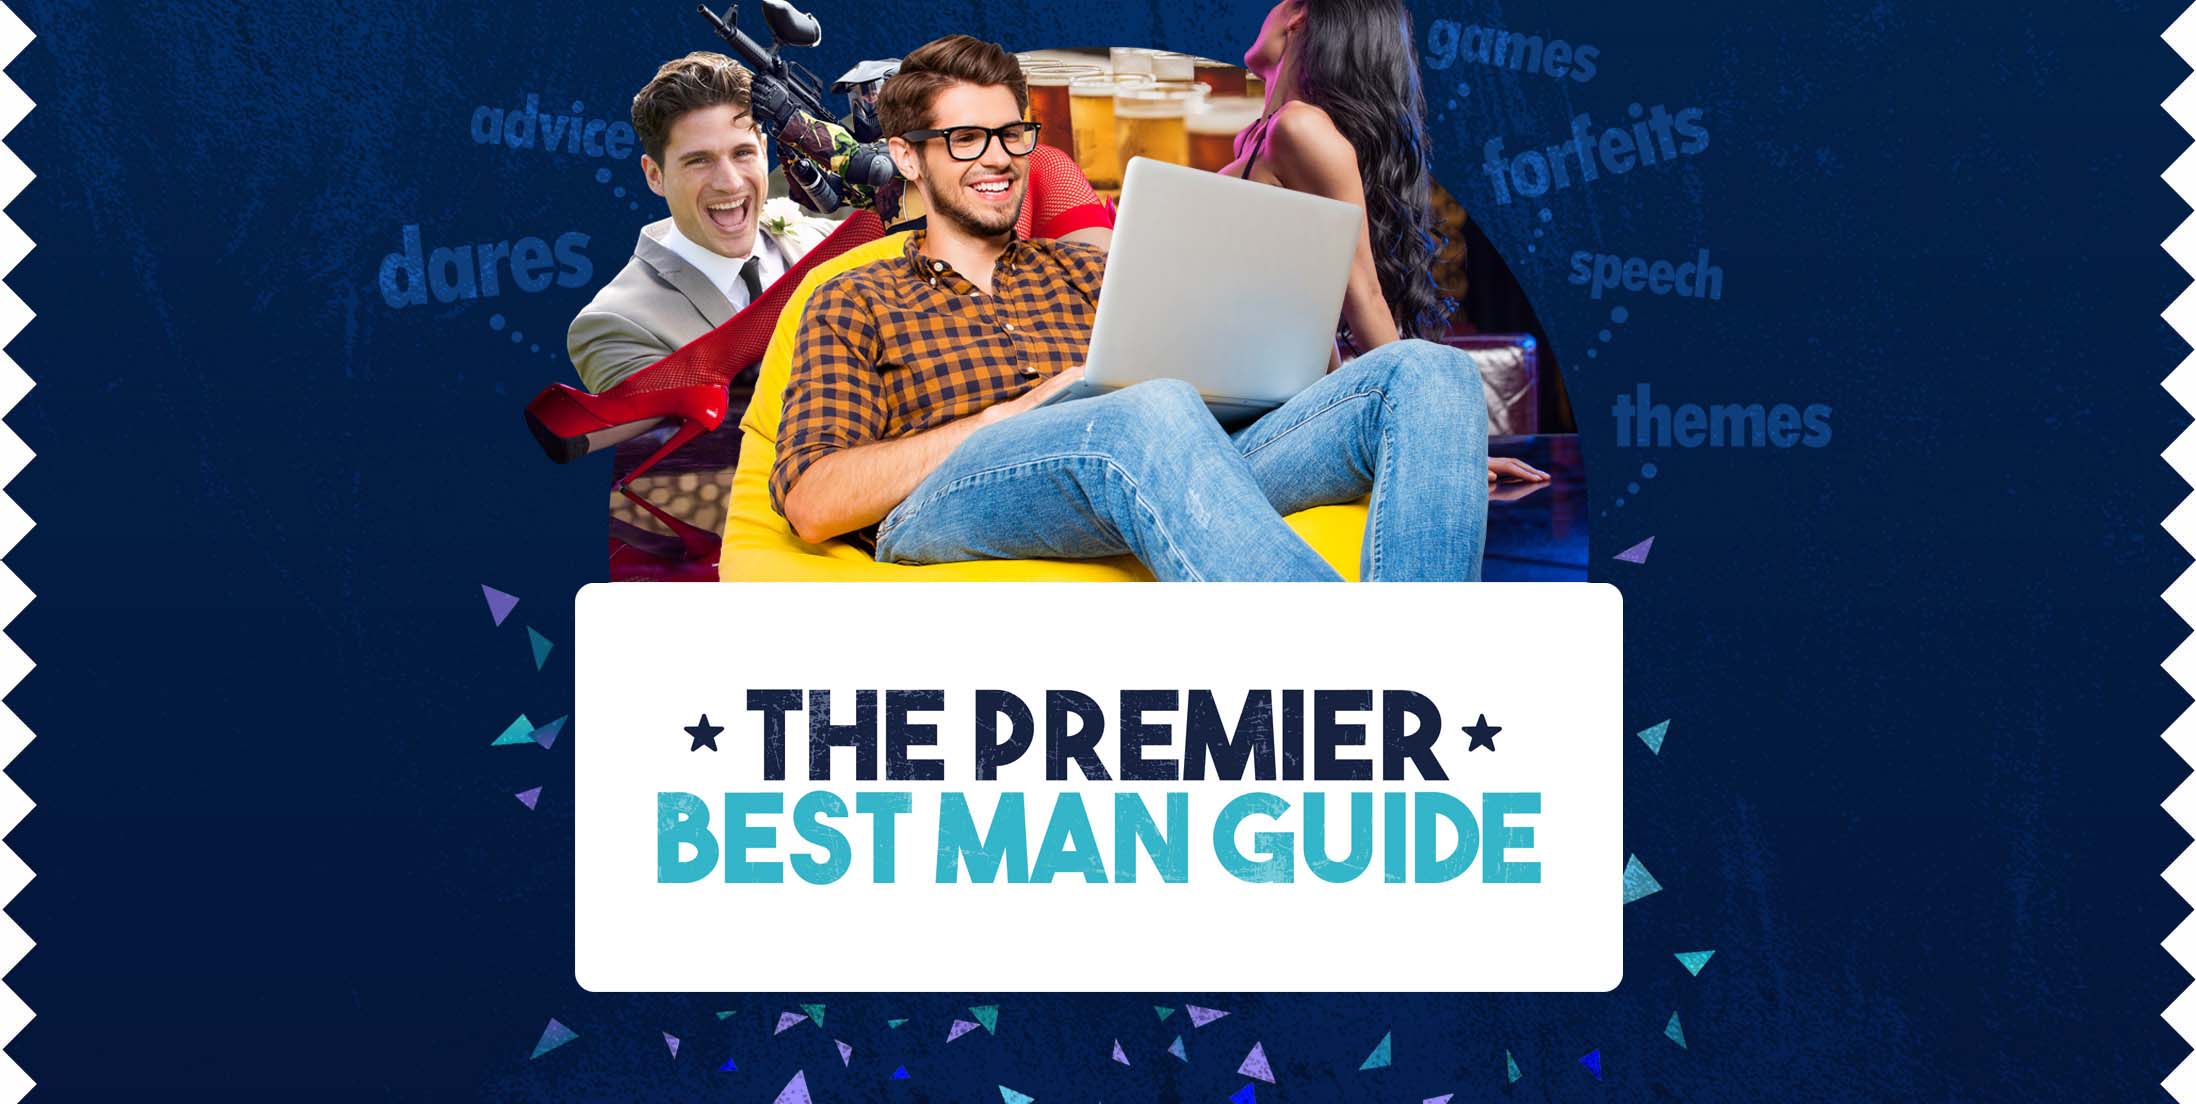 The Premier Best Man Guide